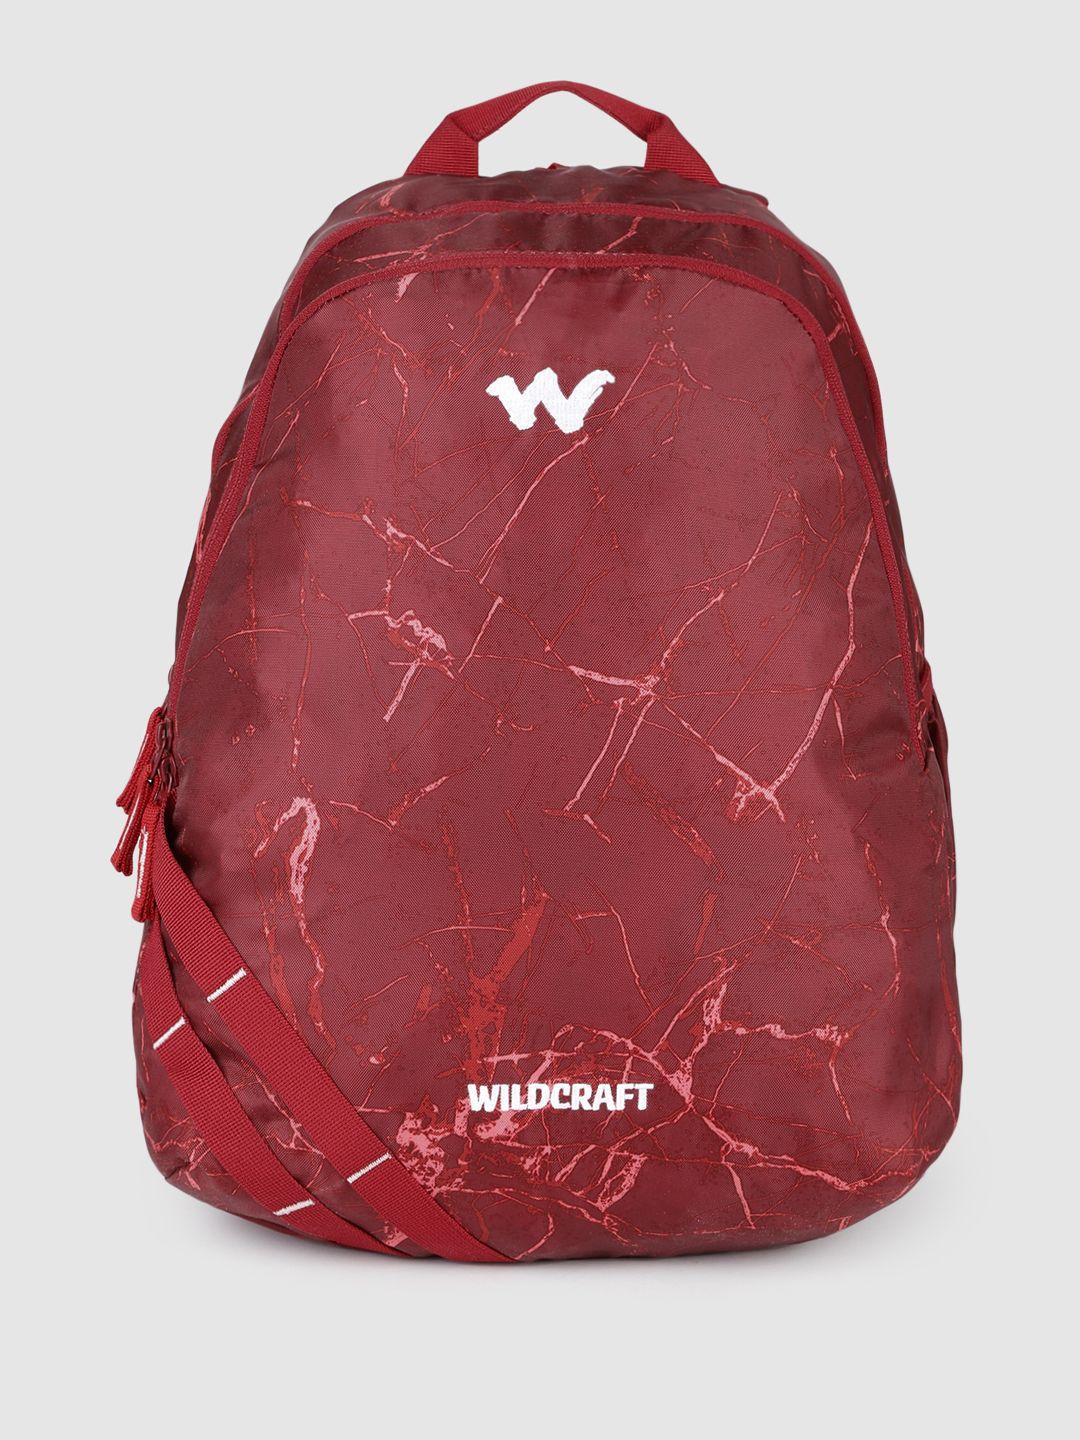 wildcraft unisex wc 1 racks abstract printed backpack